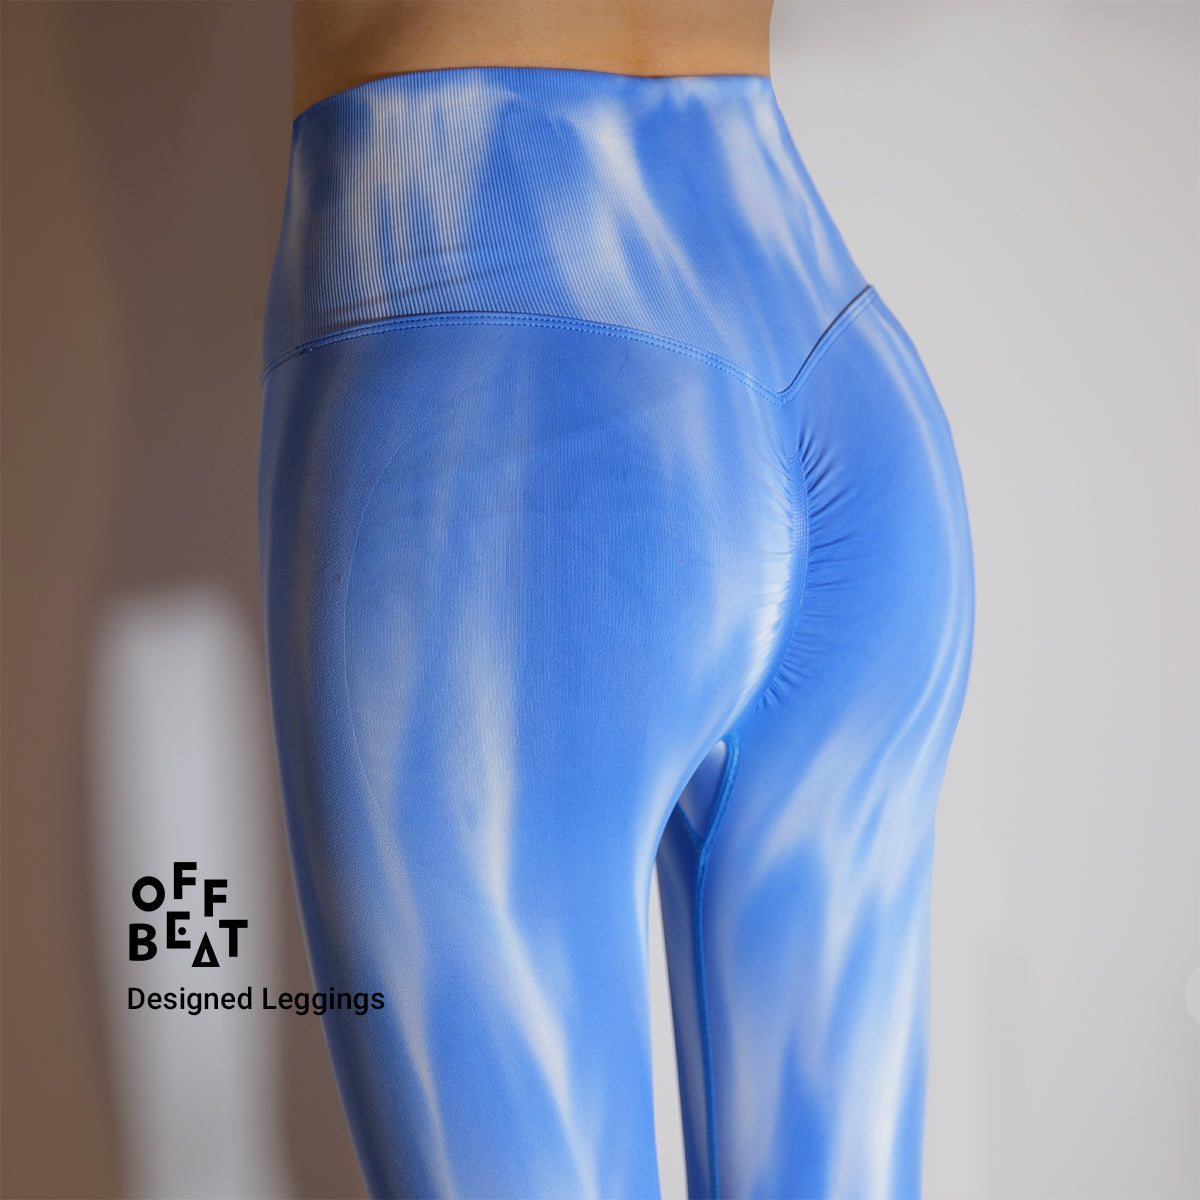 Sport/Yoga designed leggings from Offbeat, blue spectrum